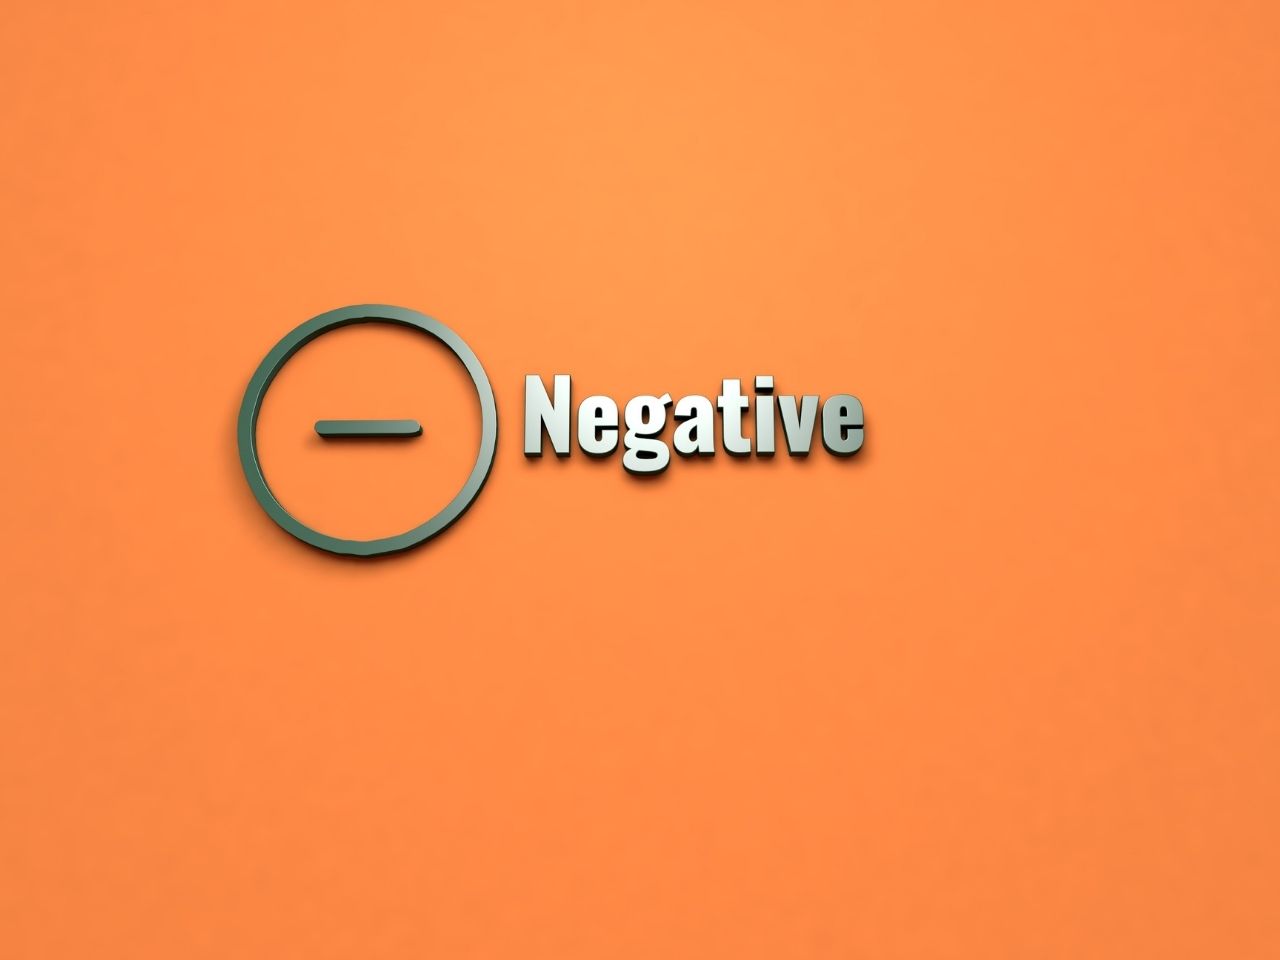 Negative text on orange background